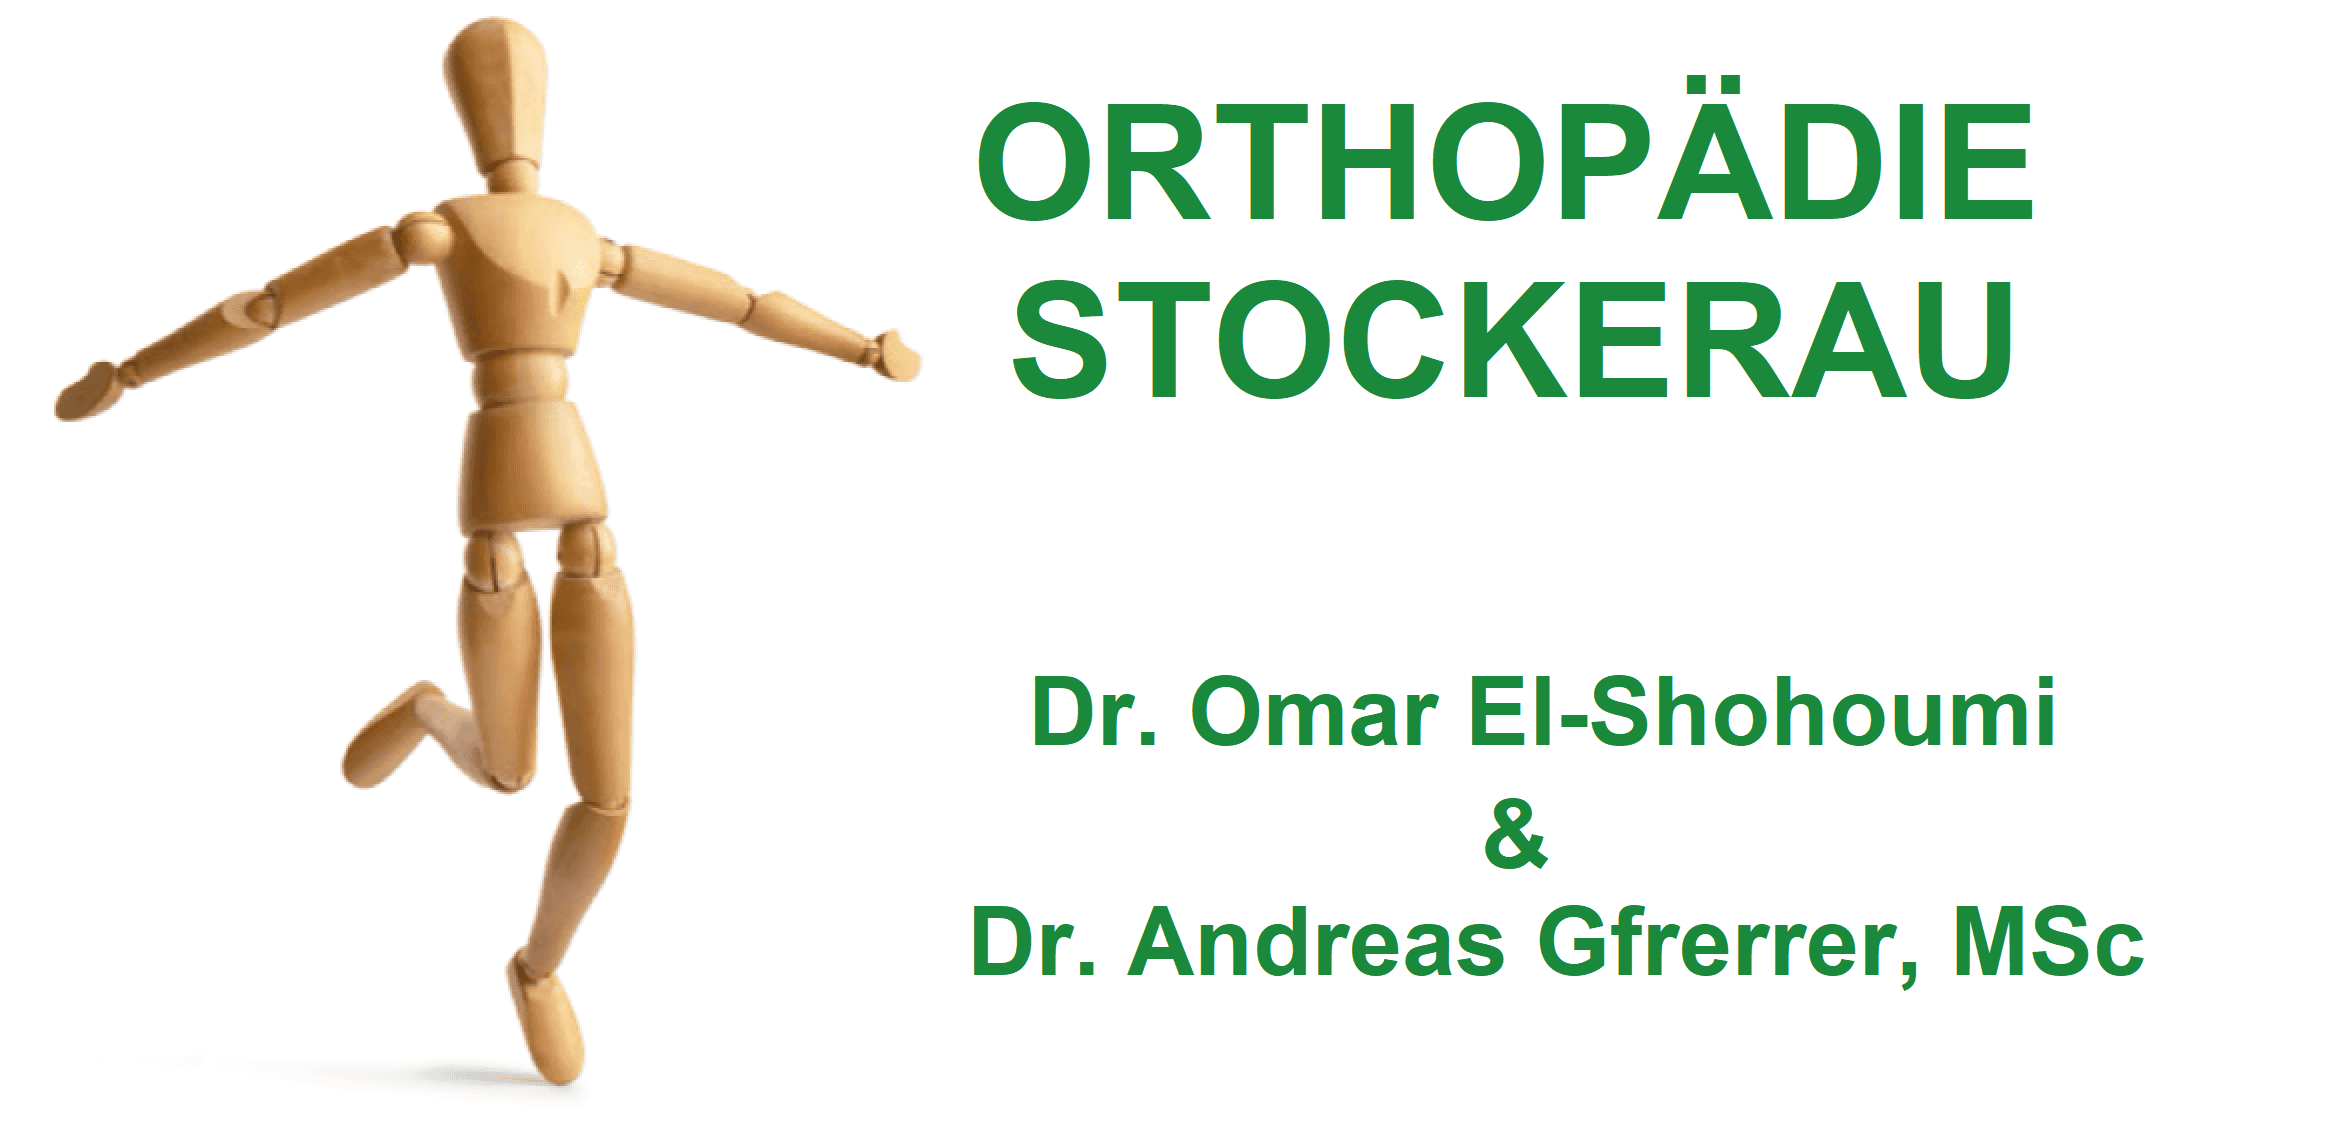 Vorschau - Foto 1 von Orthopädie Stockerau - Dr. Omar El-Shohoumi & Dr. Andreas Gfrerrer